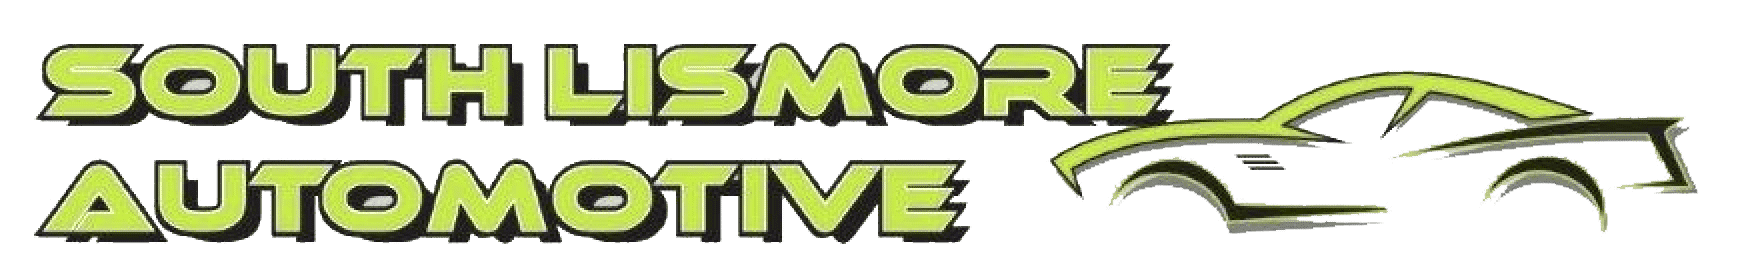 South Lismore Automotive: Auto Mechanic in Lismore